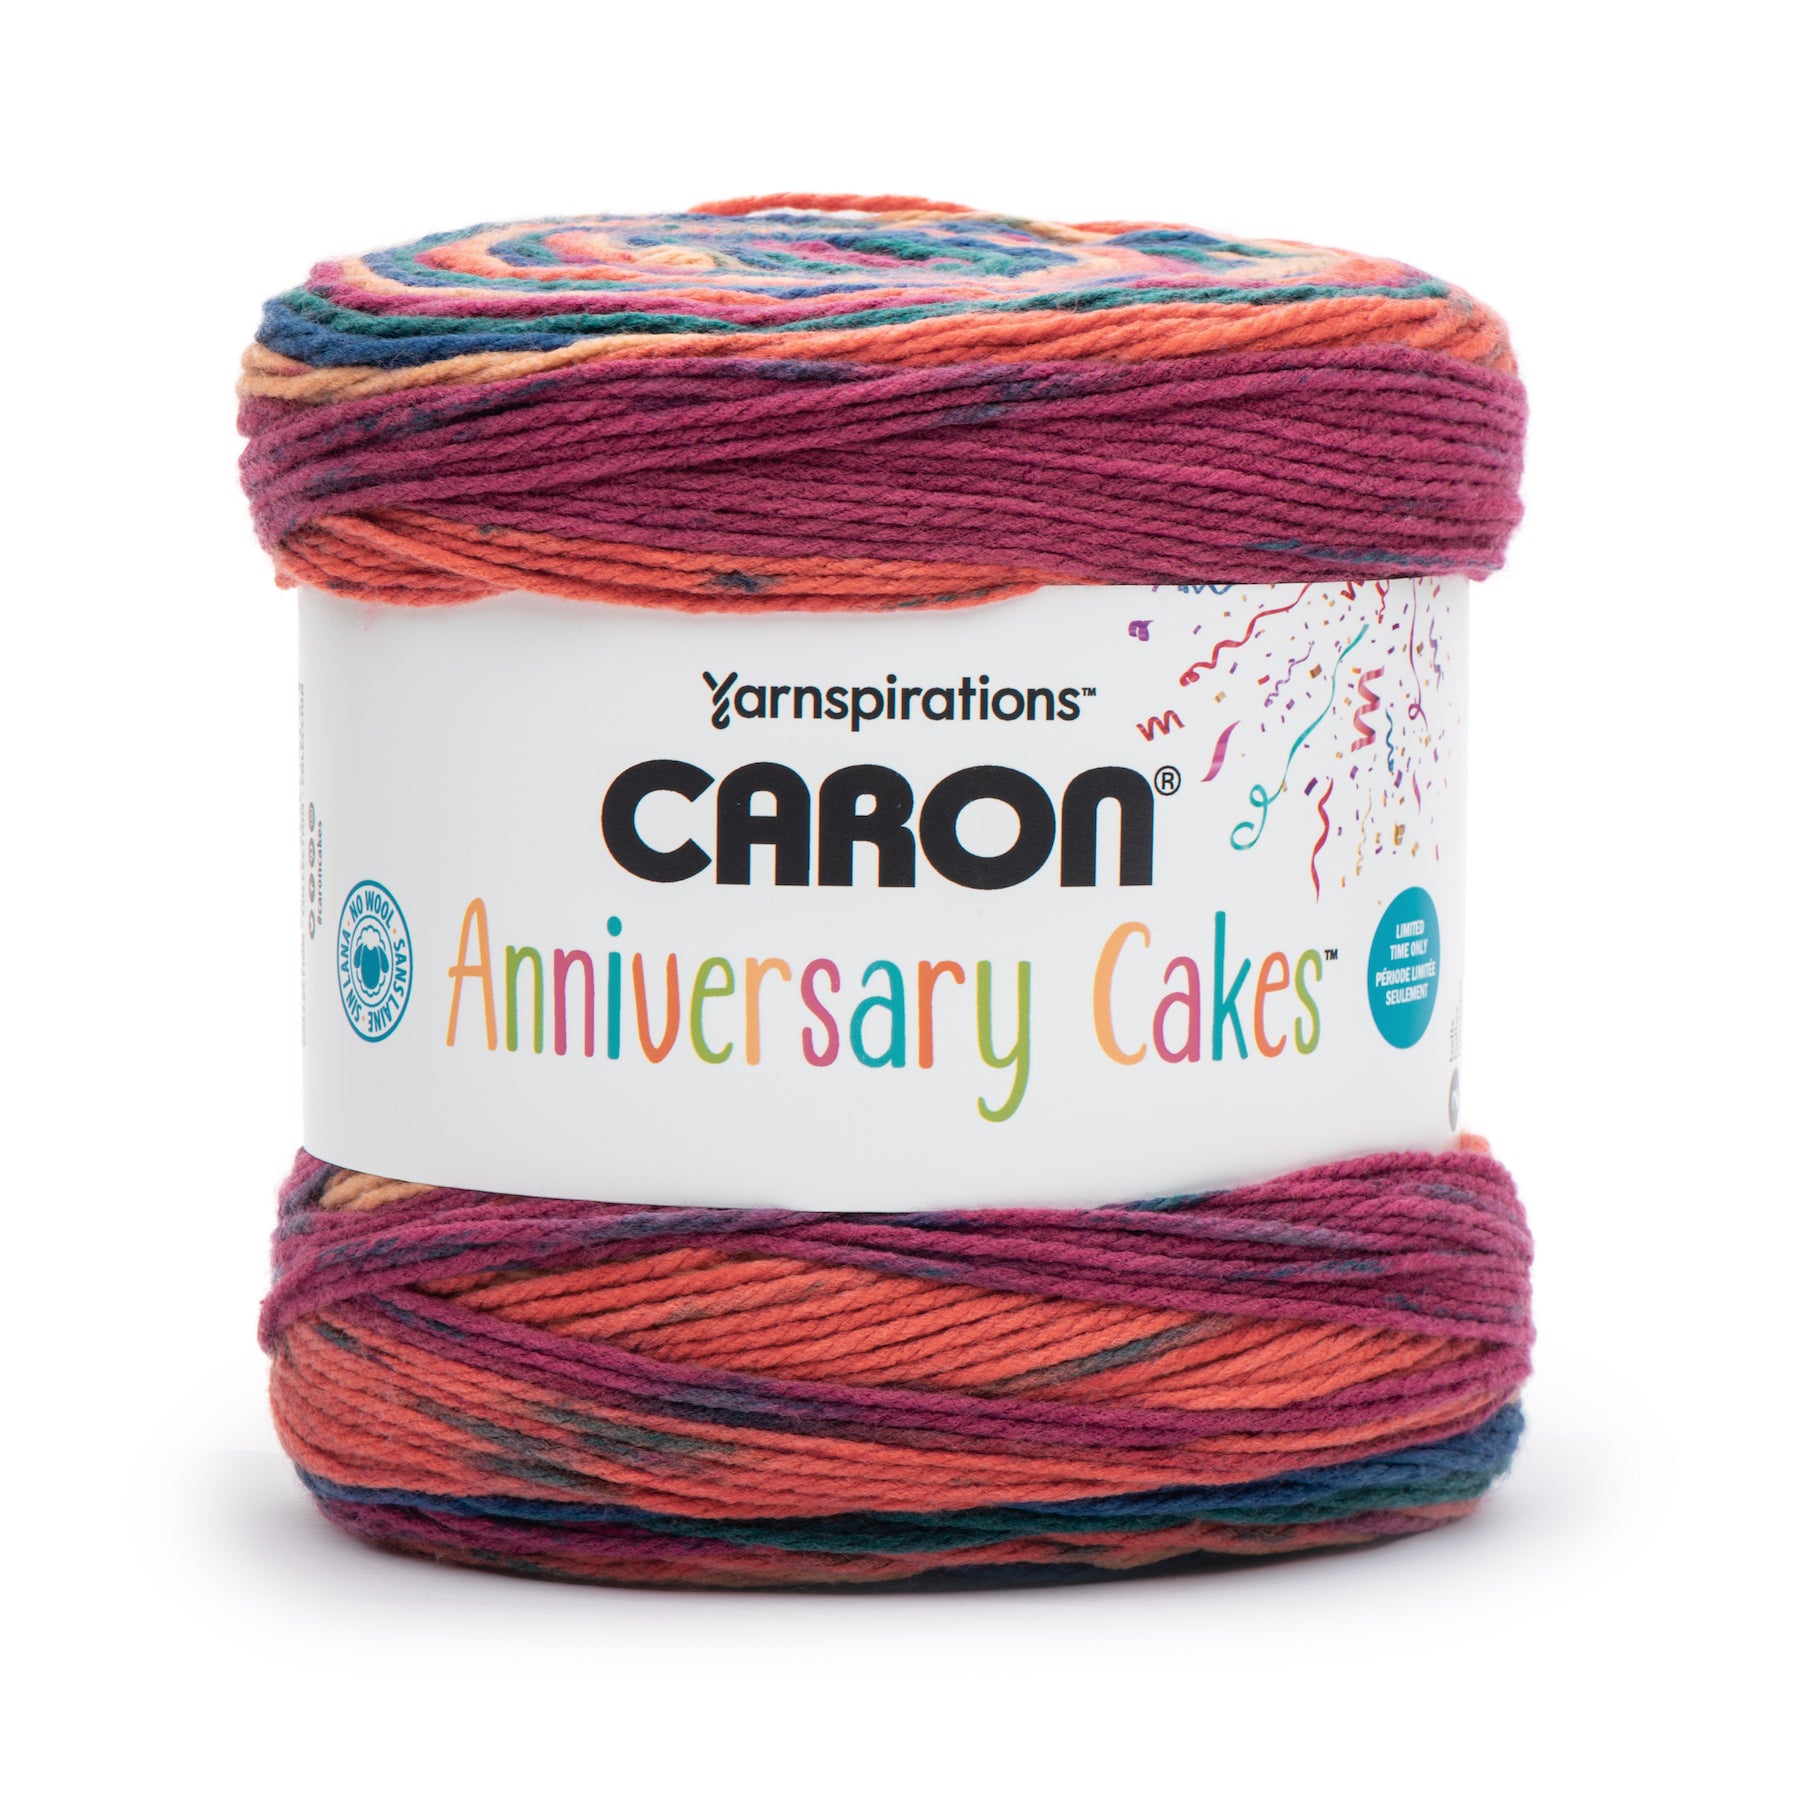 Ravelry: Caron Anniversary Cakes